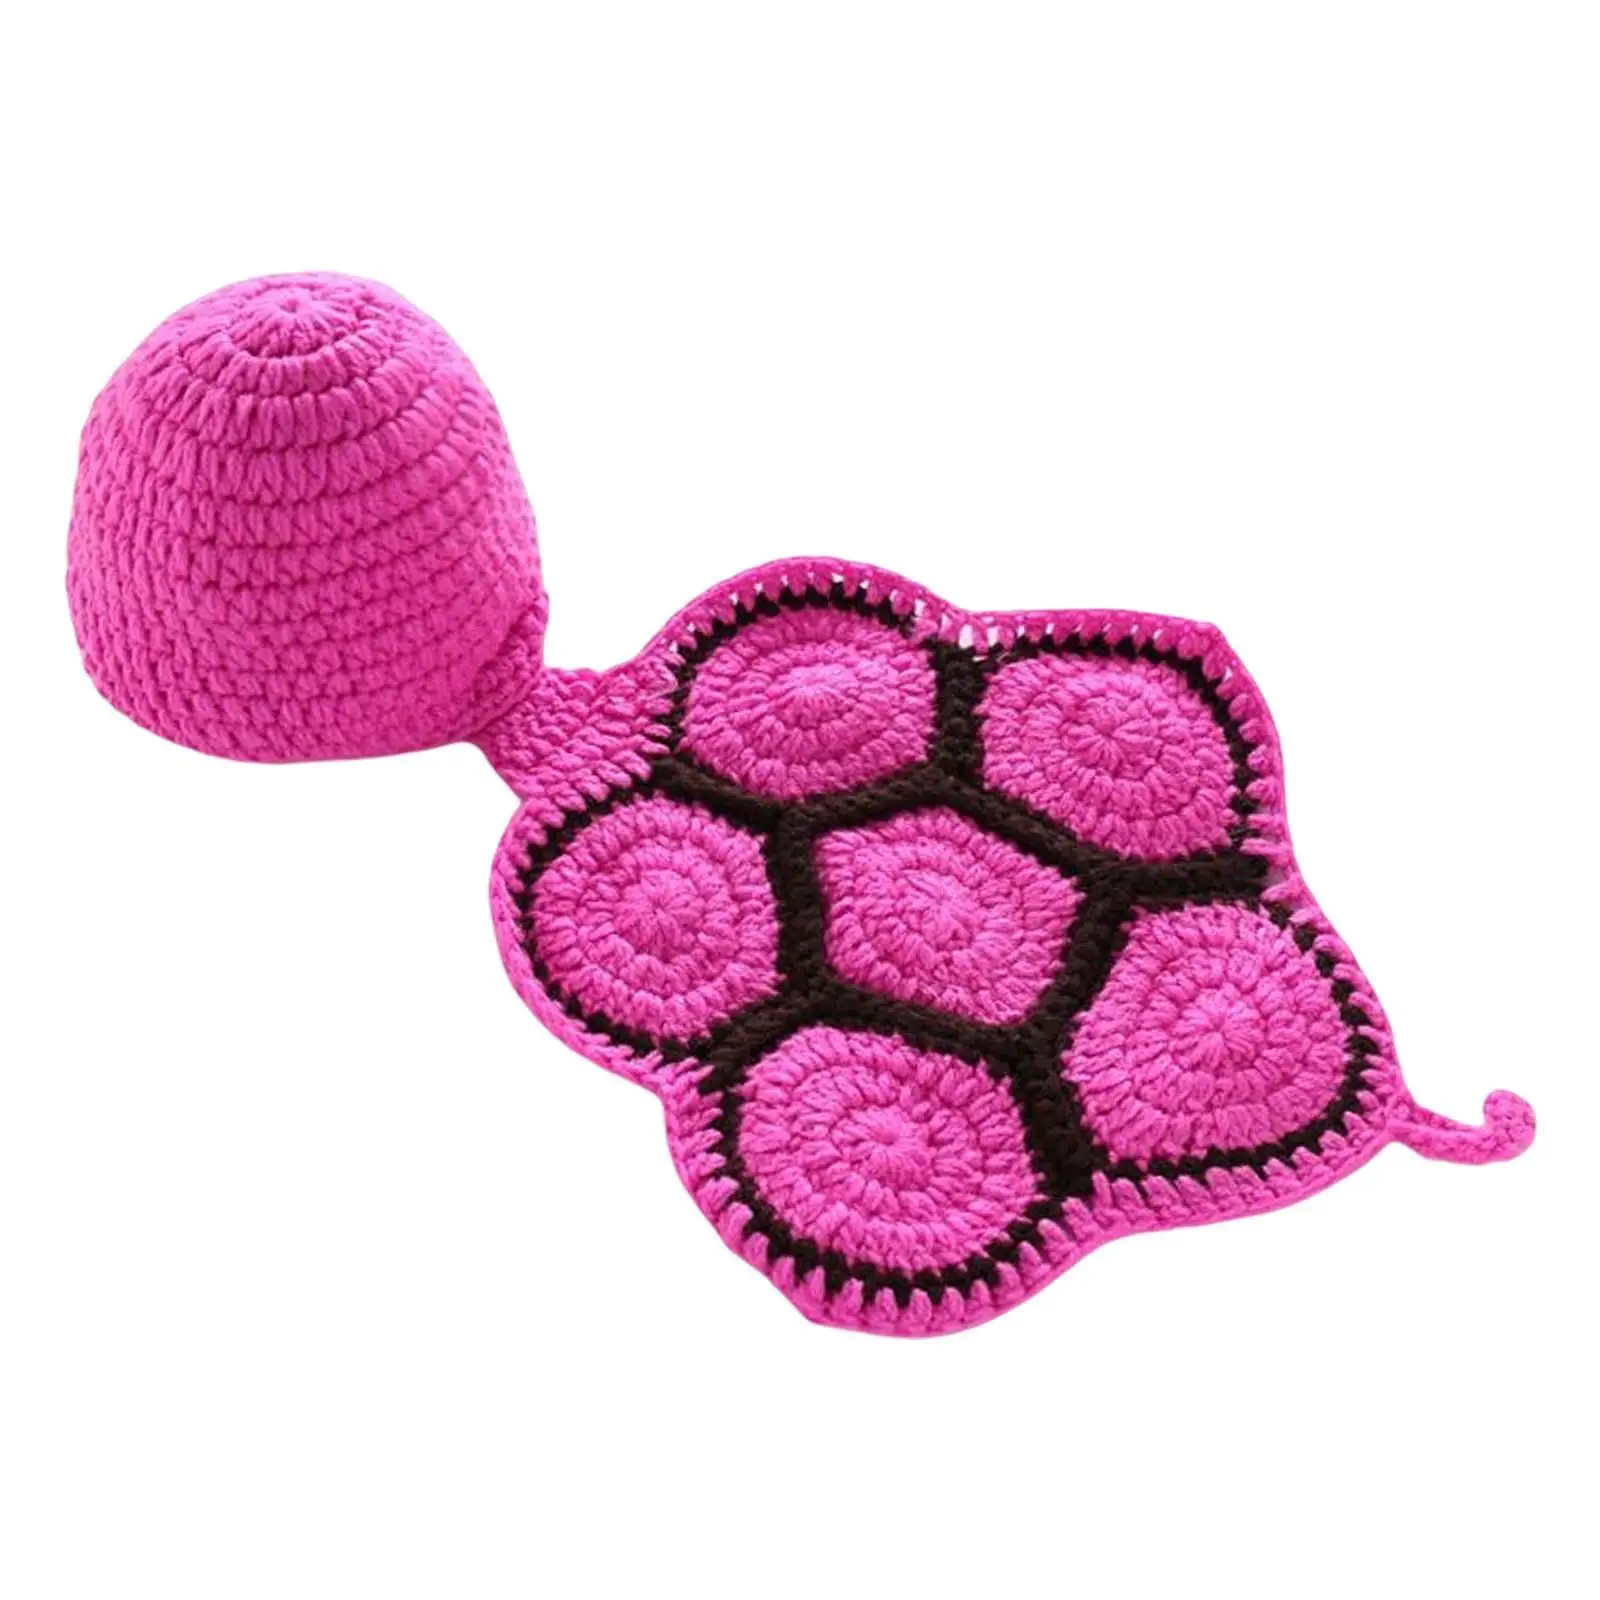 Comfortable Newborn Baby Costume Animal Knit Photo Prop Turtle for Halloween Cosplay